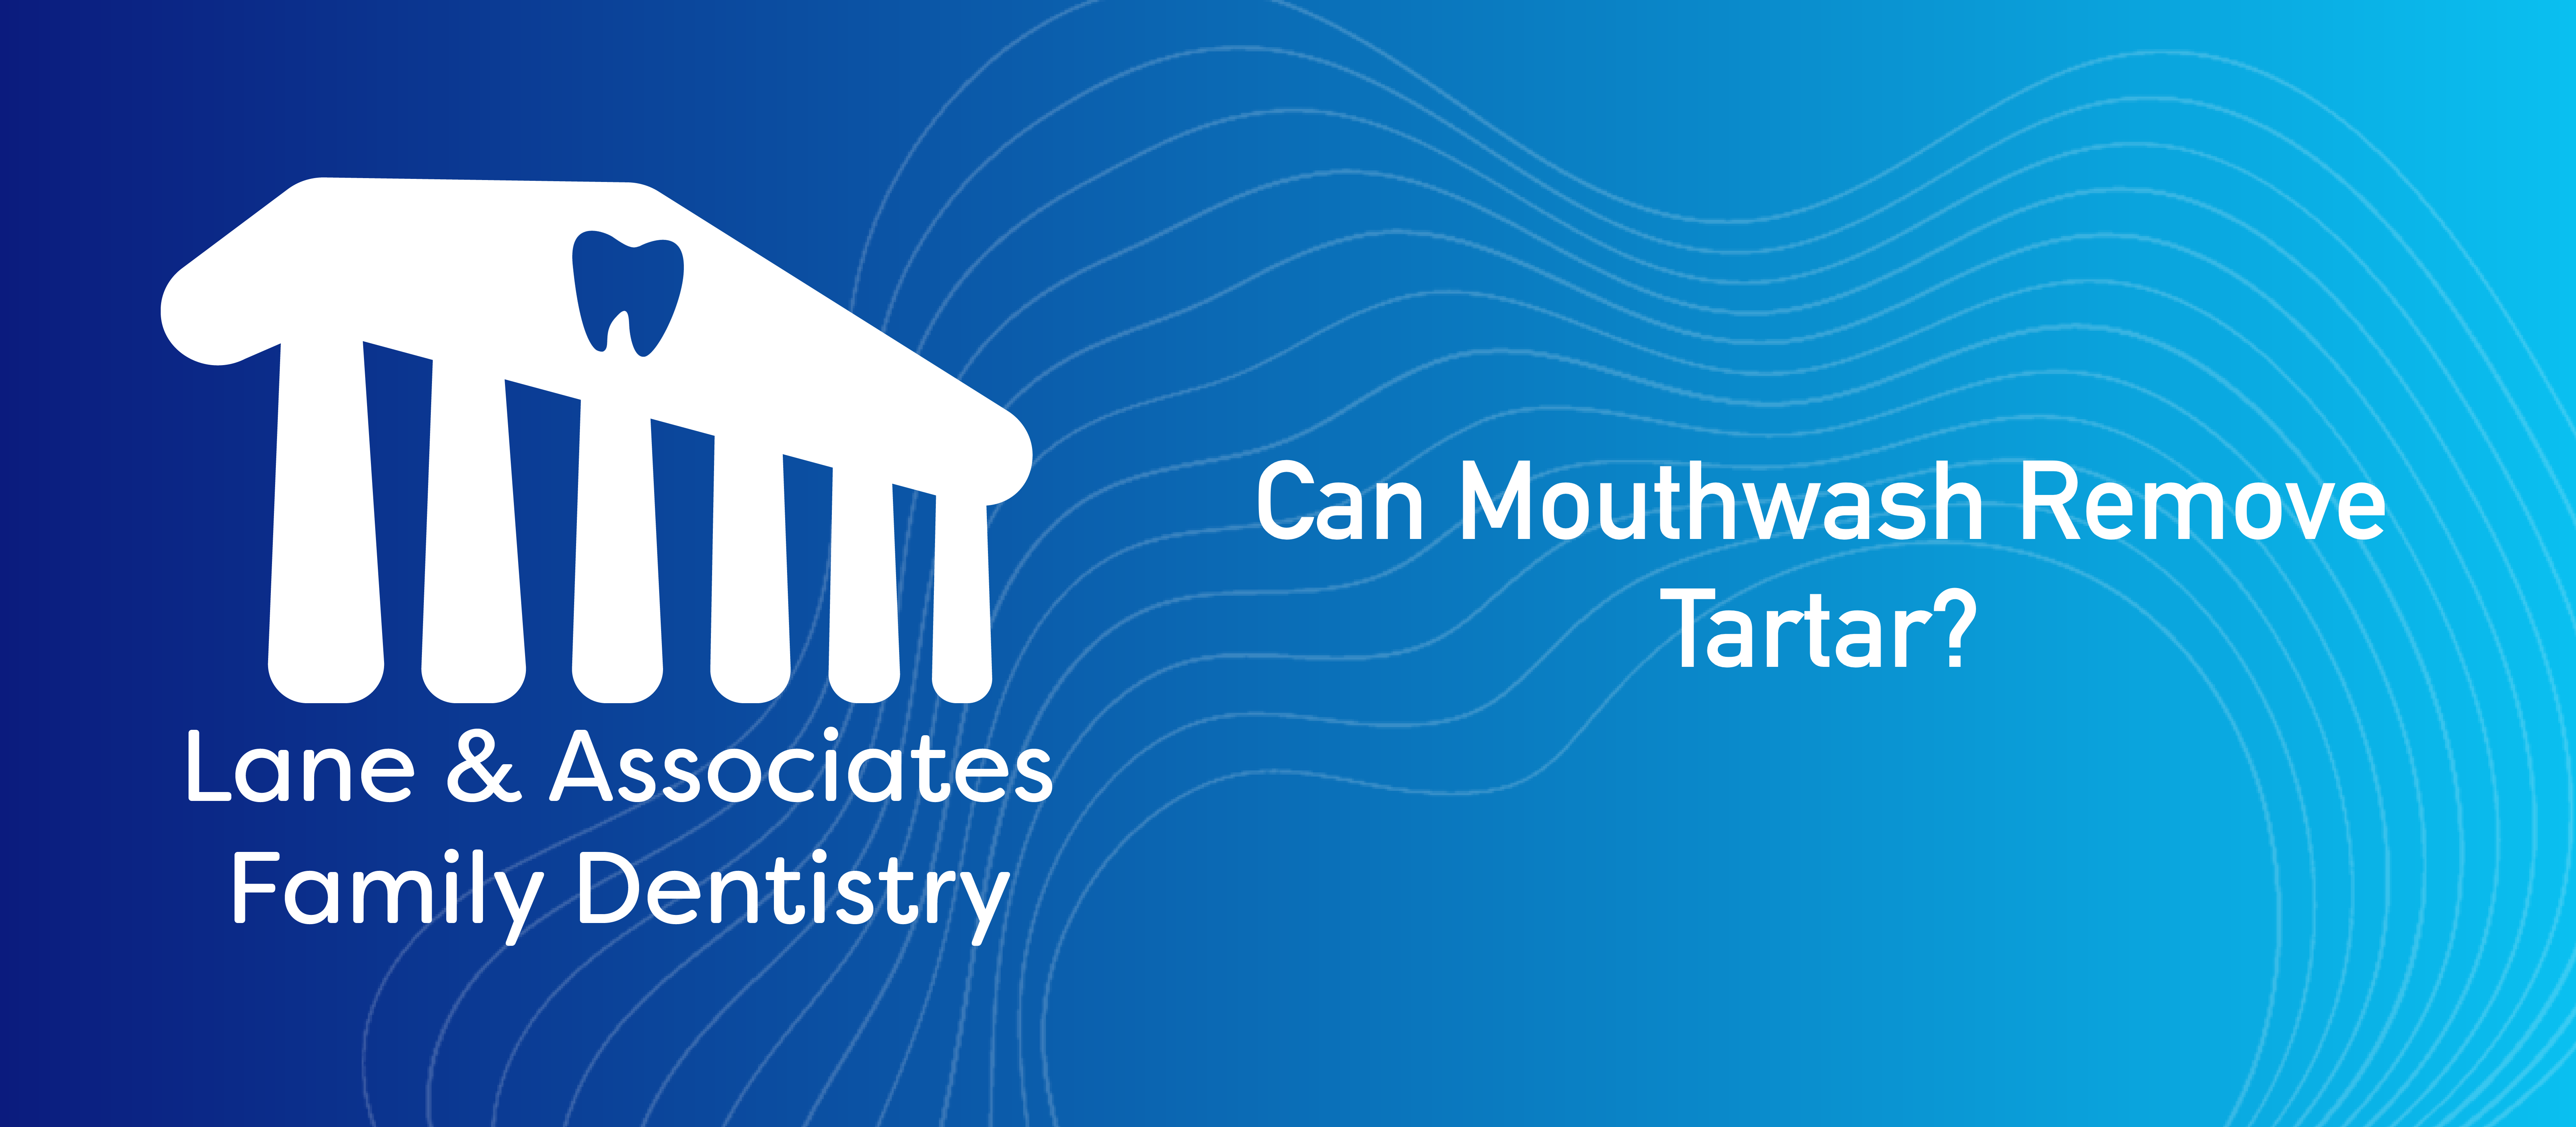 Can mouthwash remove tartar?